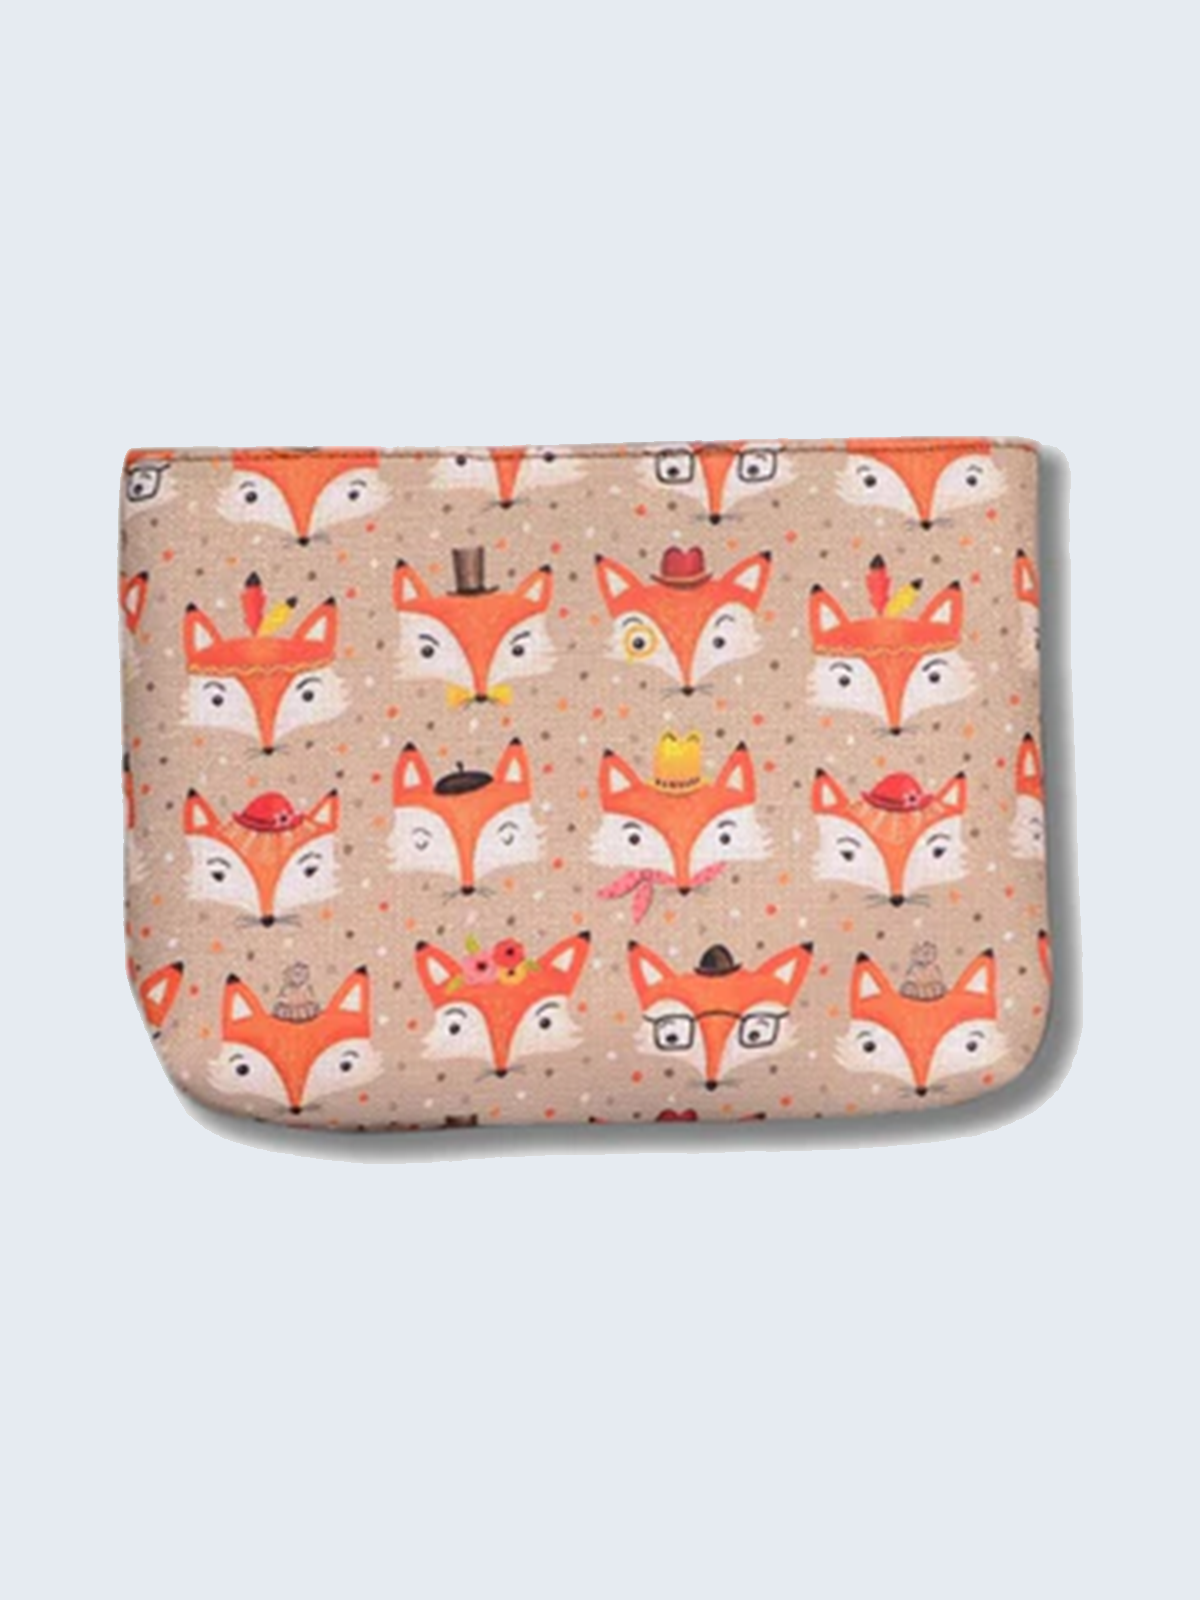 Fox print makeup pouch